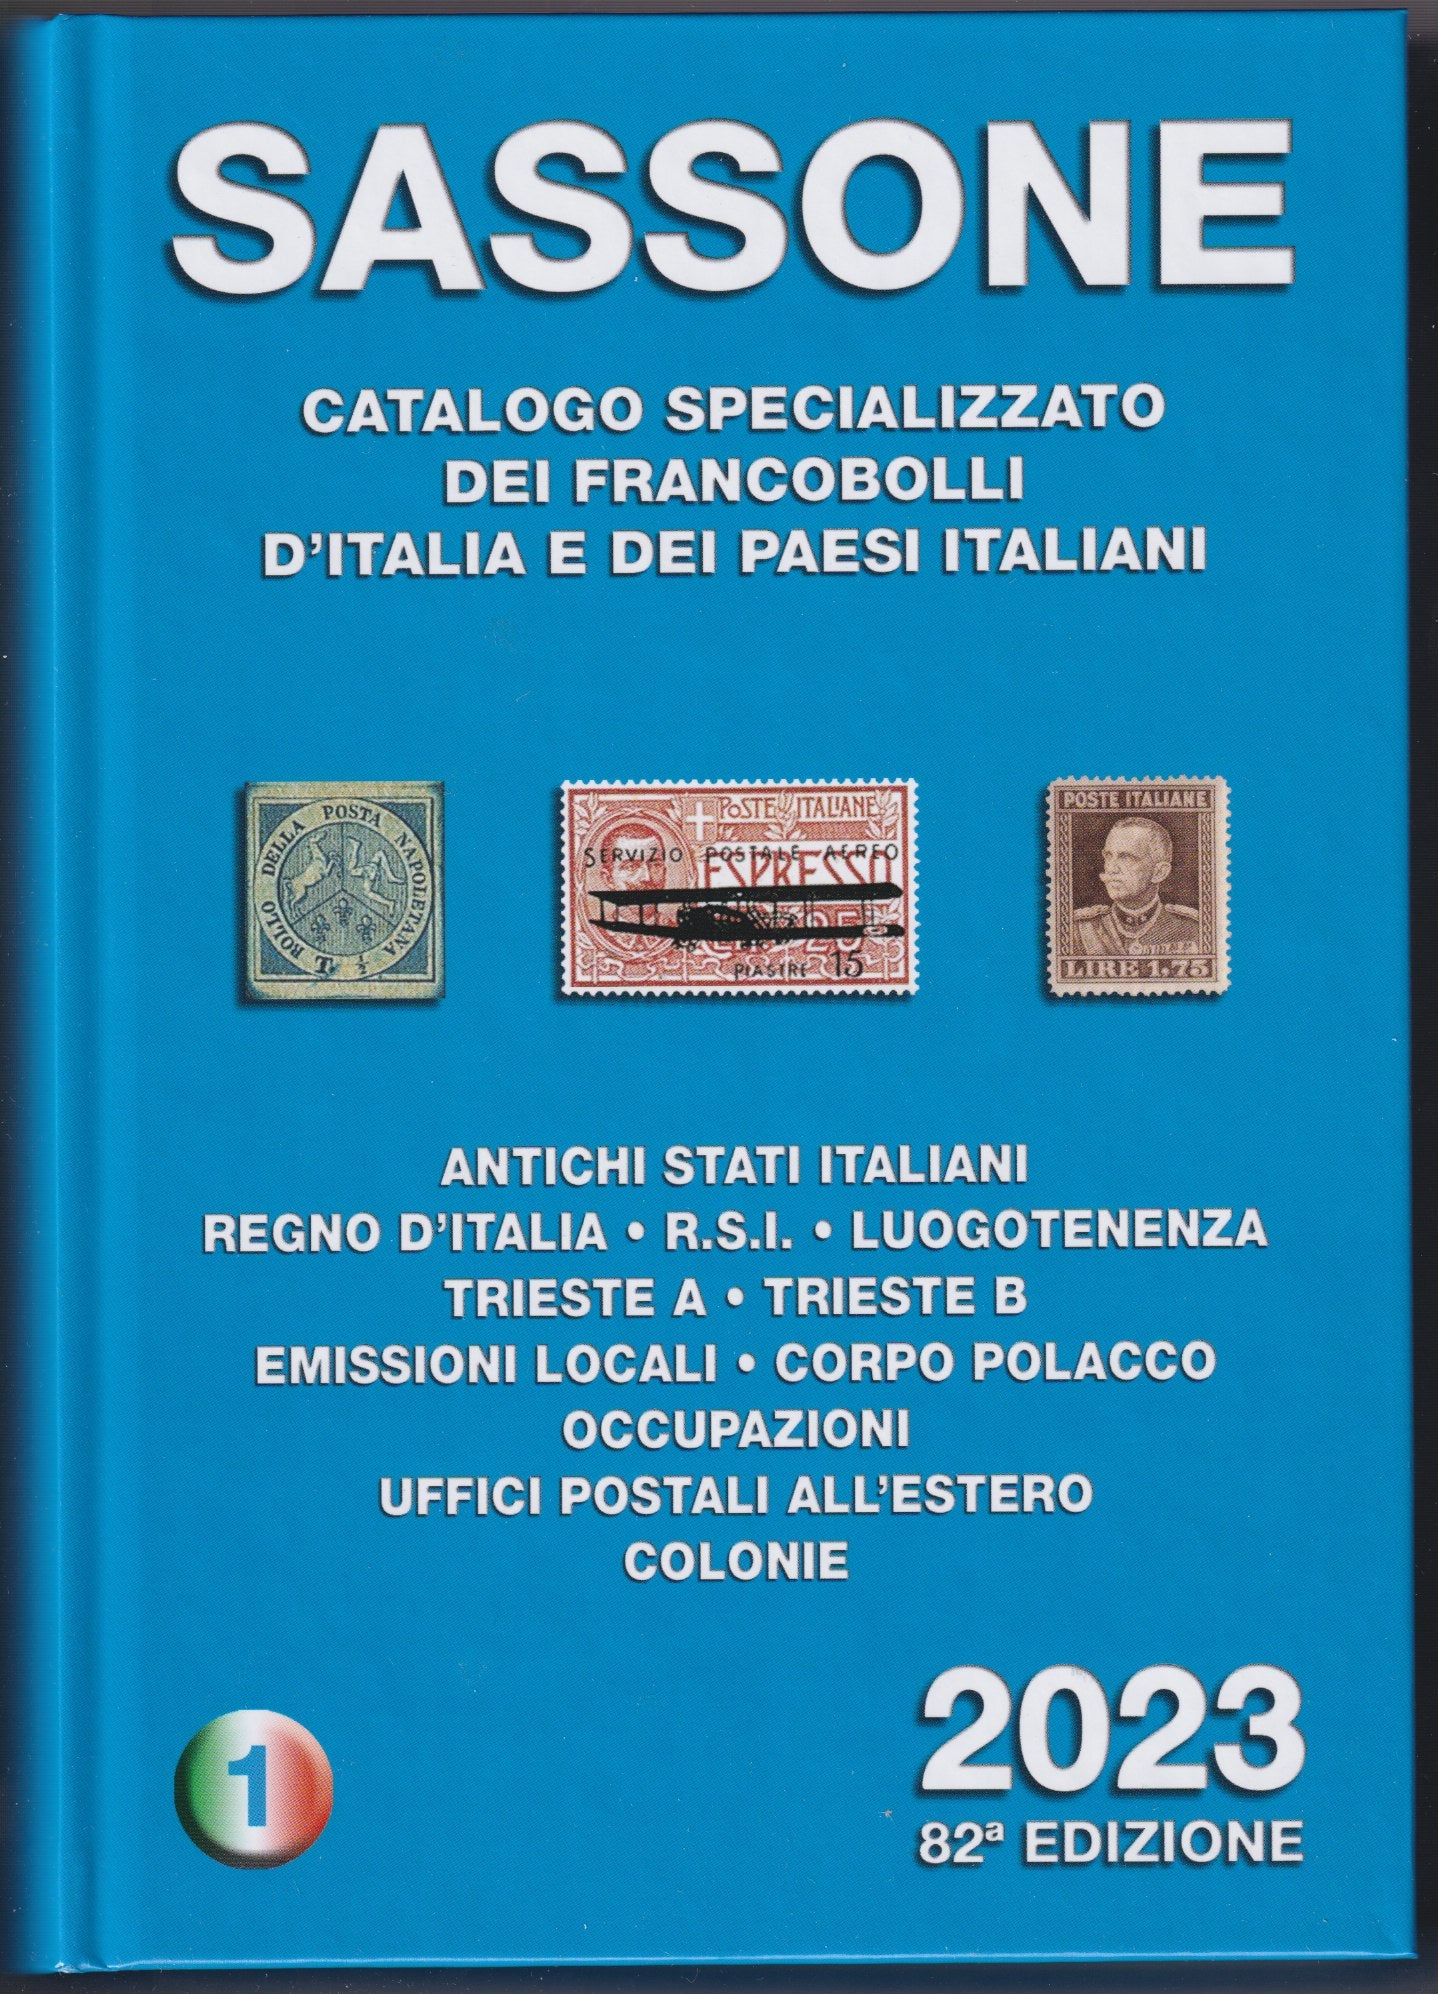 CATALOGO REGNO D'ITALIA 2023 - Volume 1